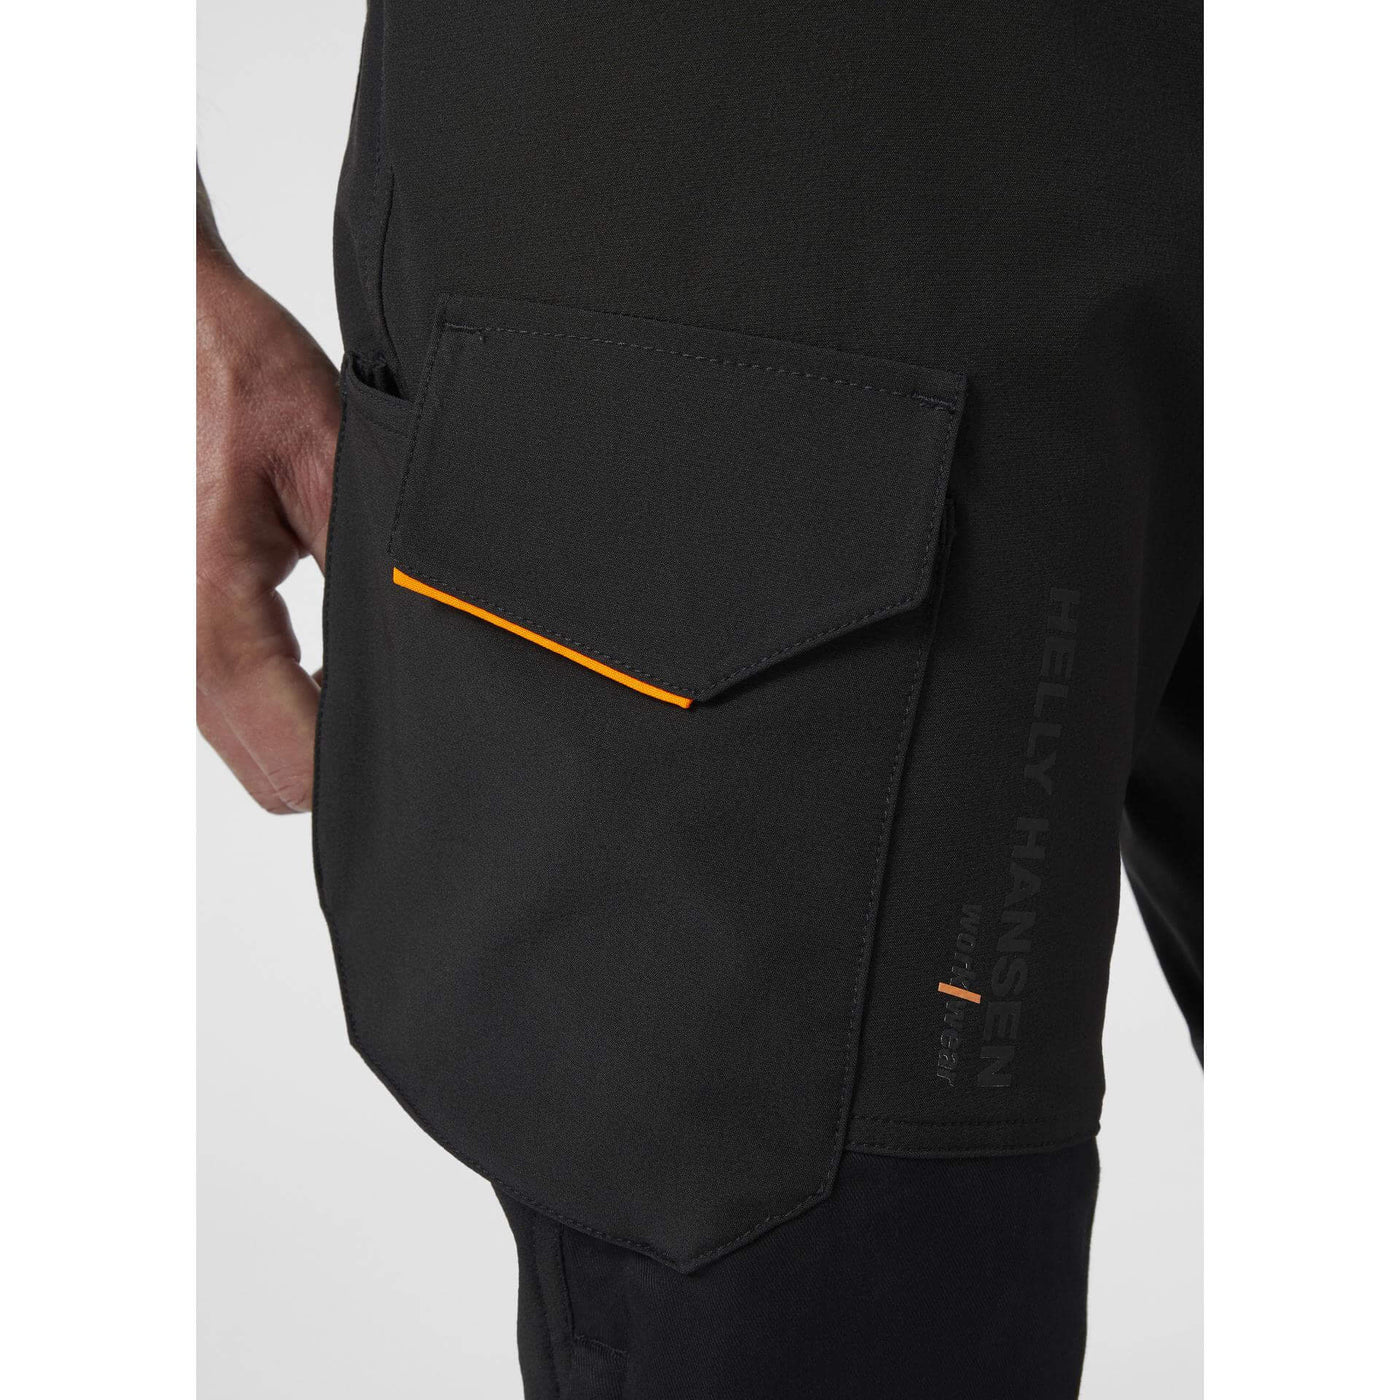 Helly Hansen Chelsea Evolution BRZ Service Work Trousers Black 6 Feature 1#colour_black